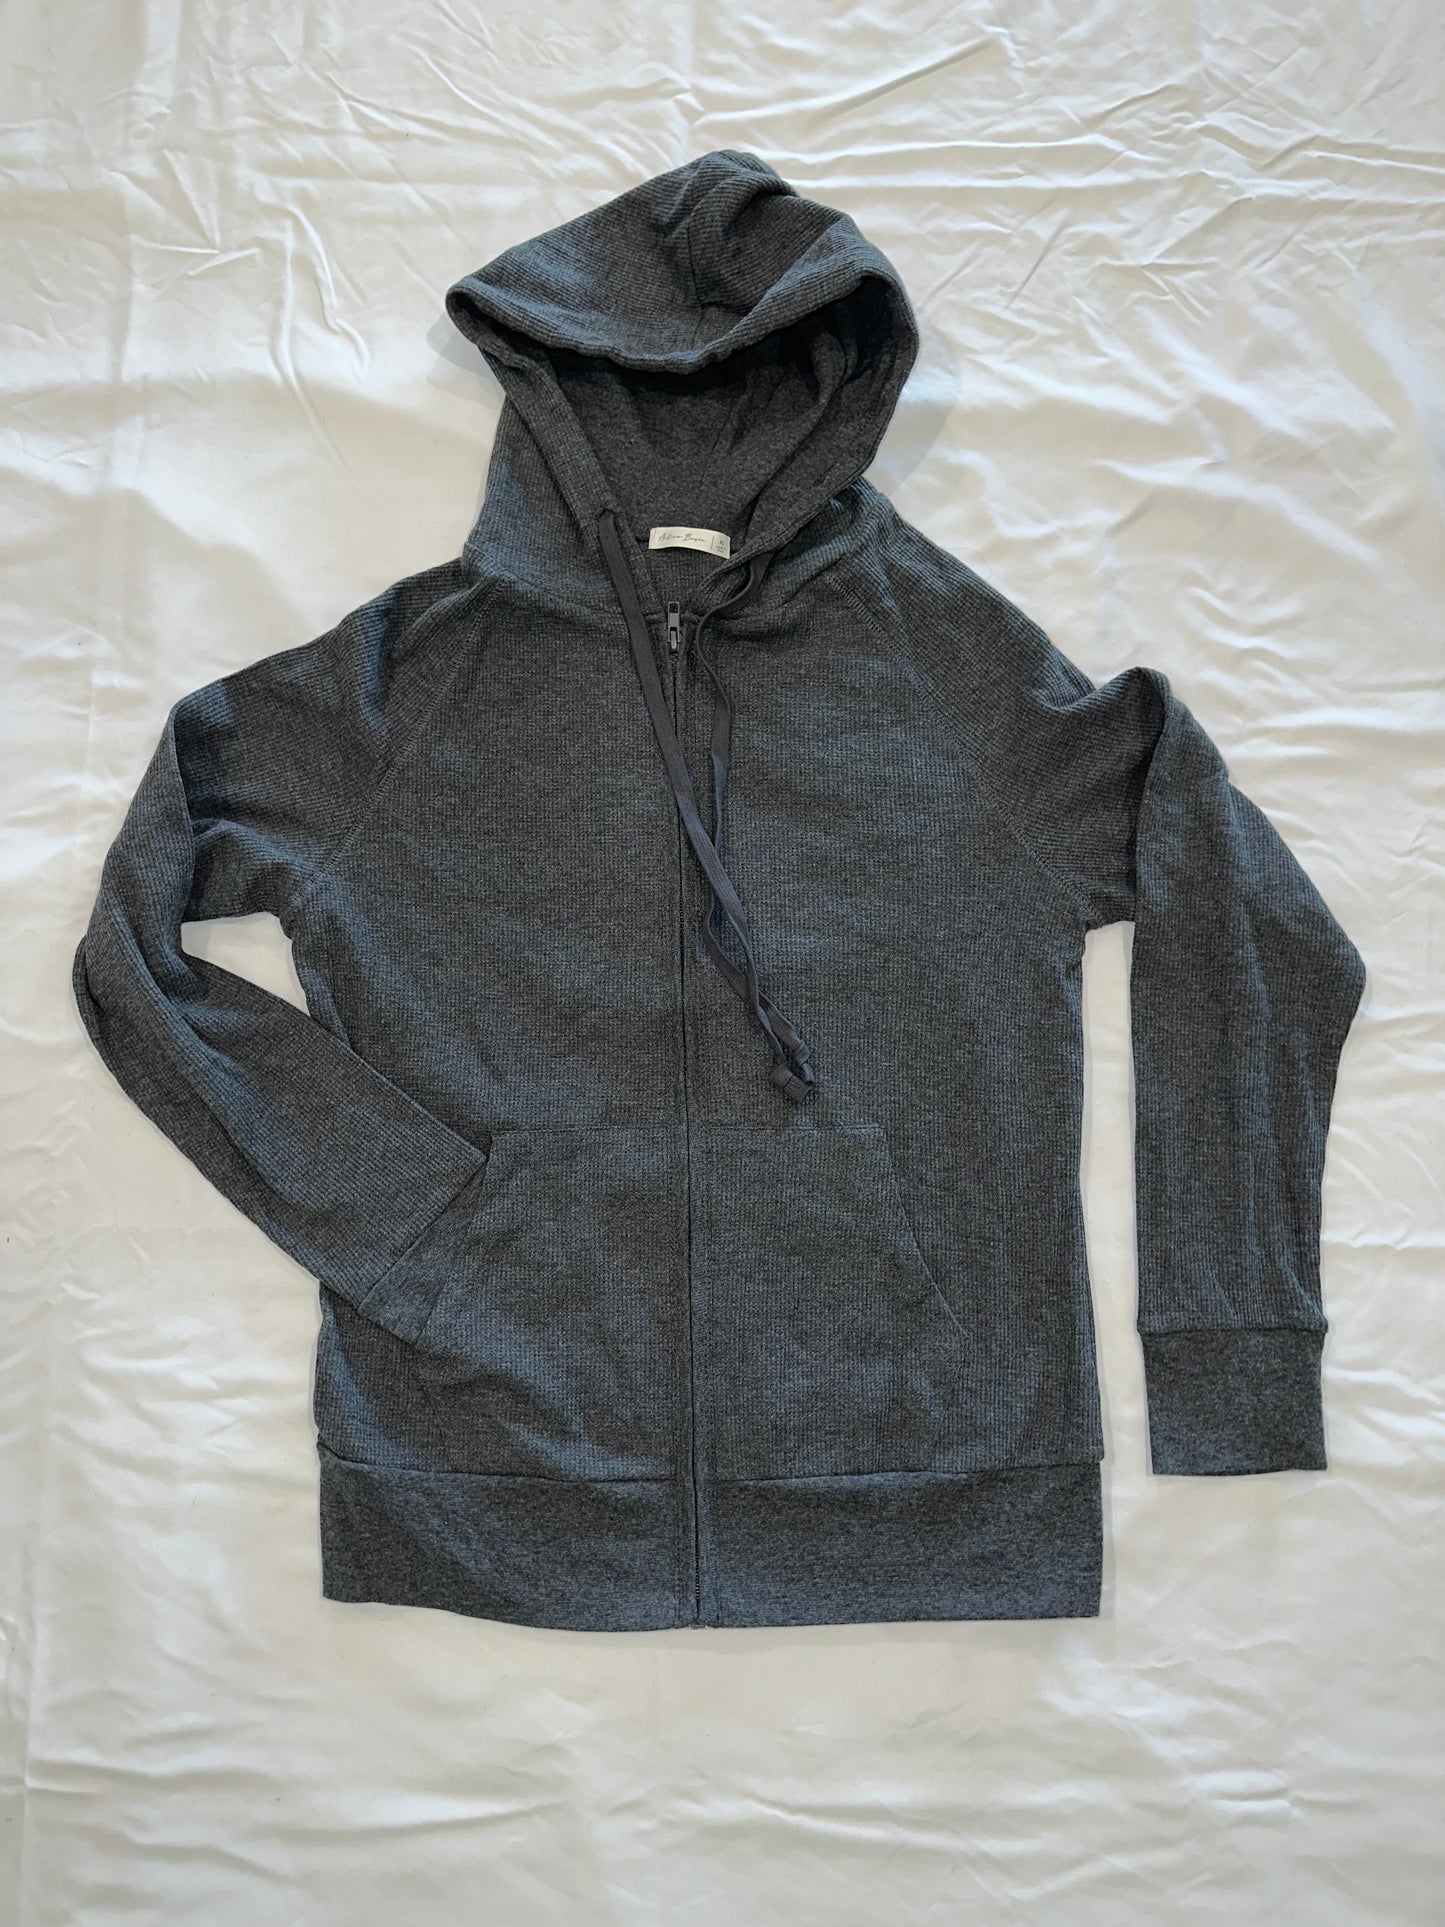 Dark Grey Thermal Zip Up Jacket Bling "CALI" Block Letter Design